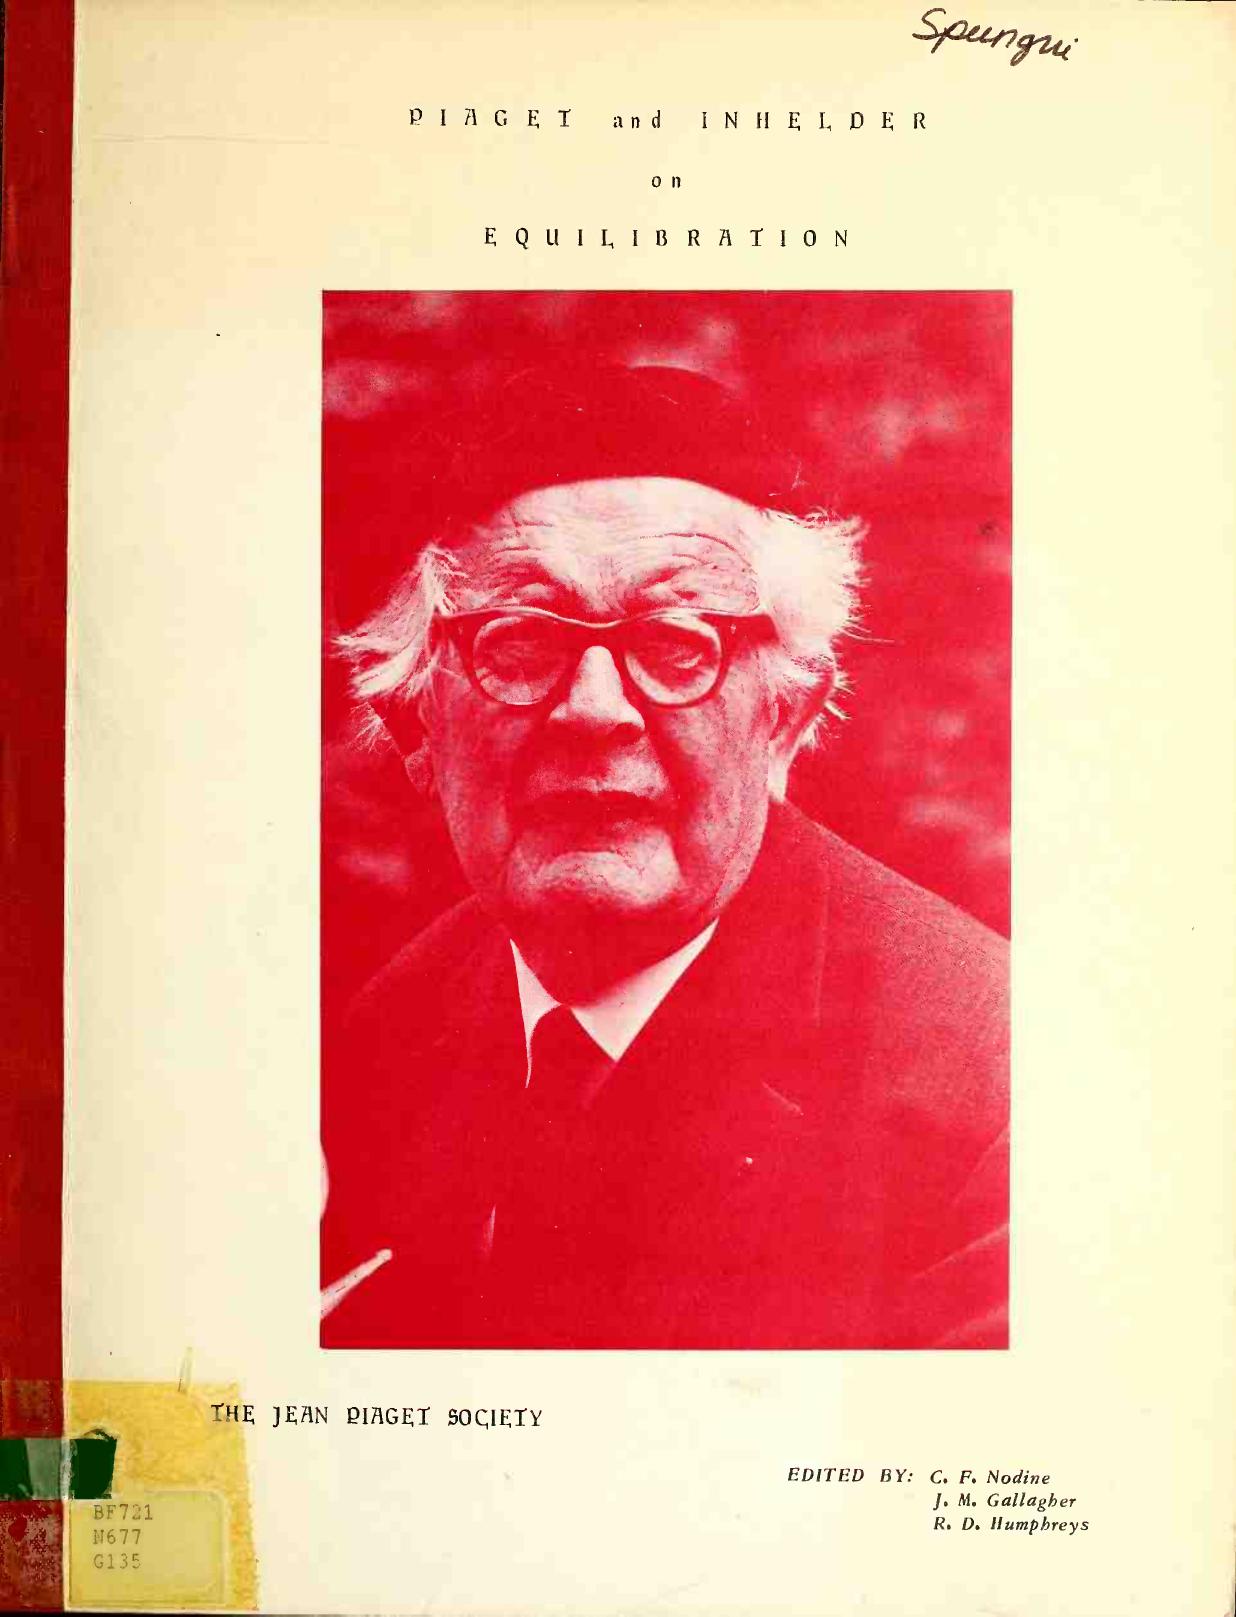 Piaget and Inhelder: On Equilibration